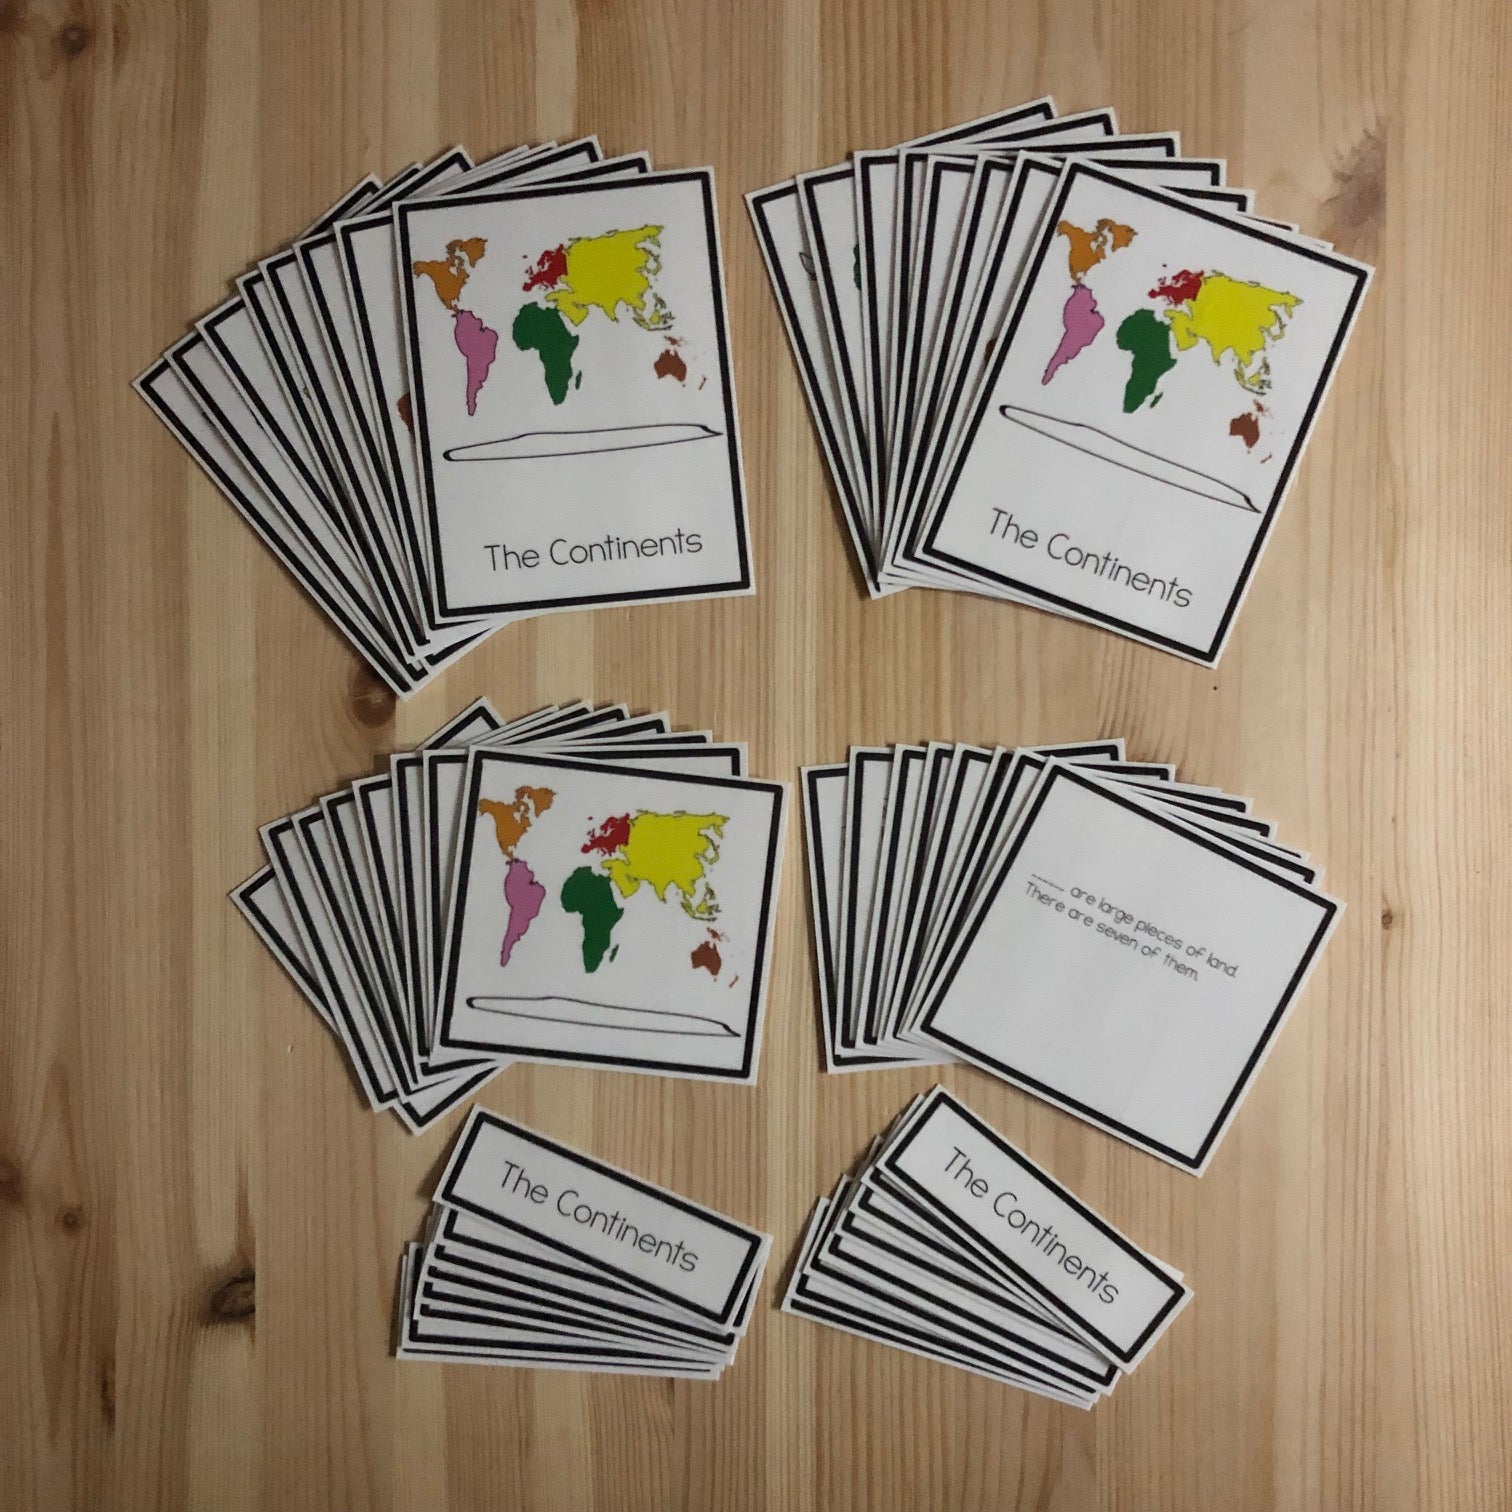 Montessori Continent 3 part cards - montessorikiwi